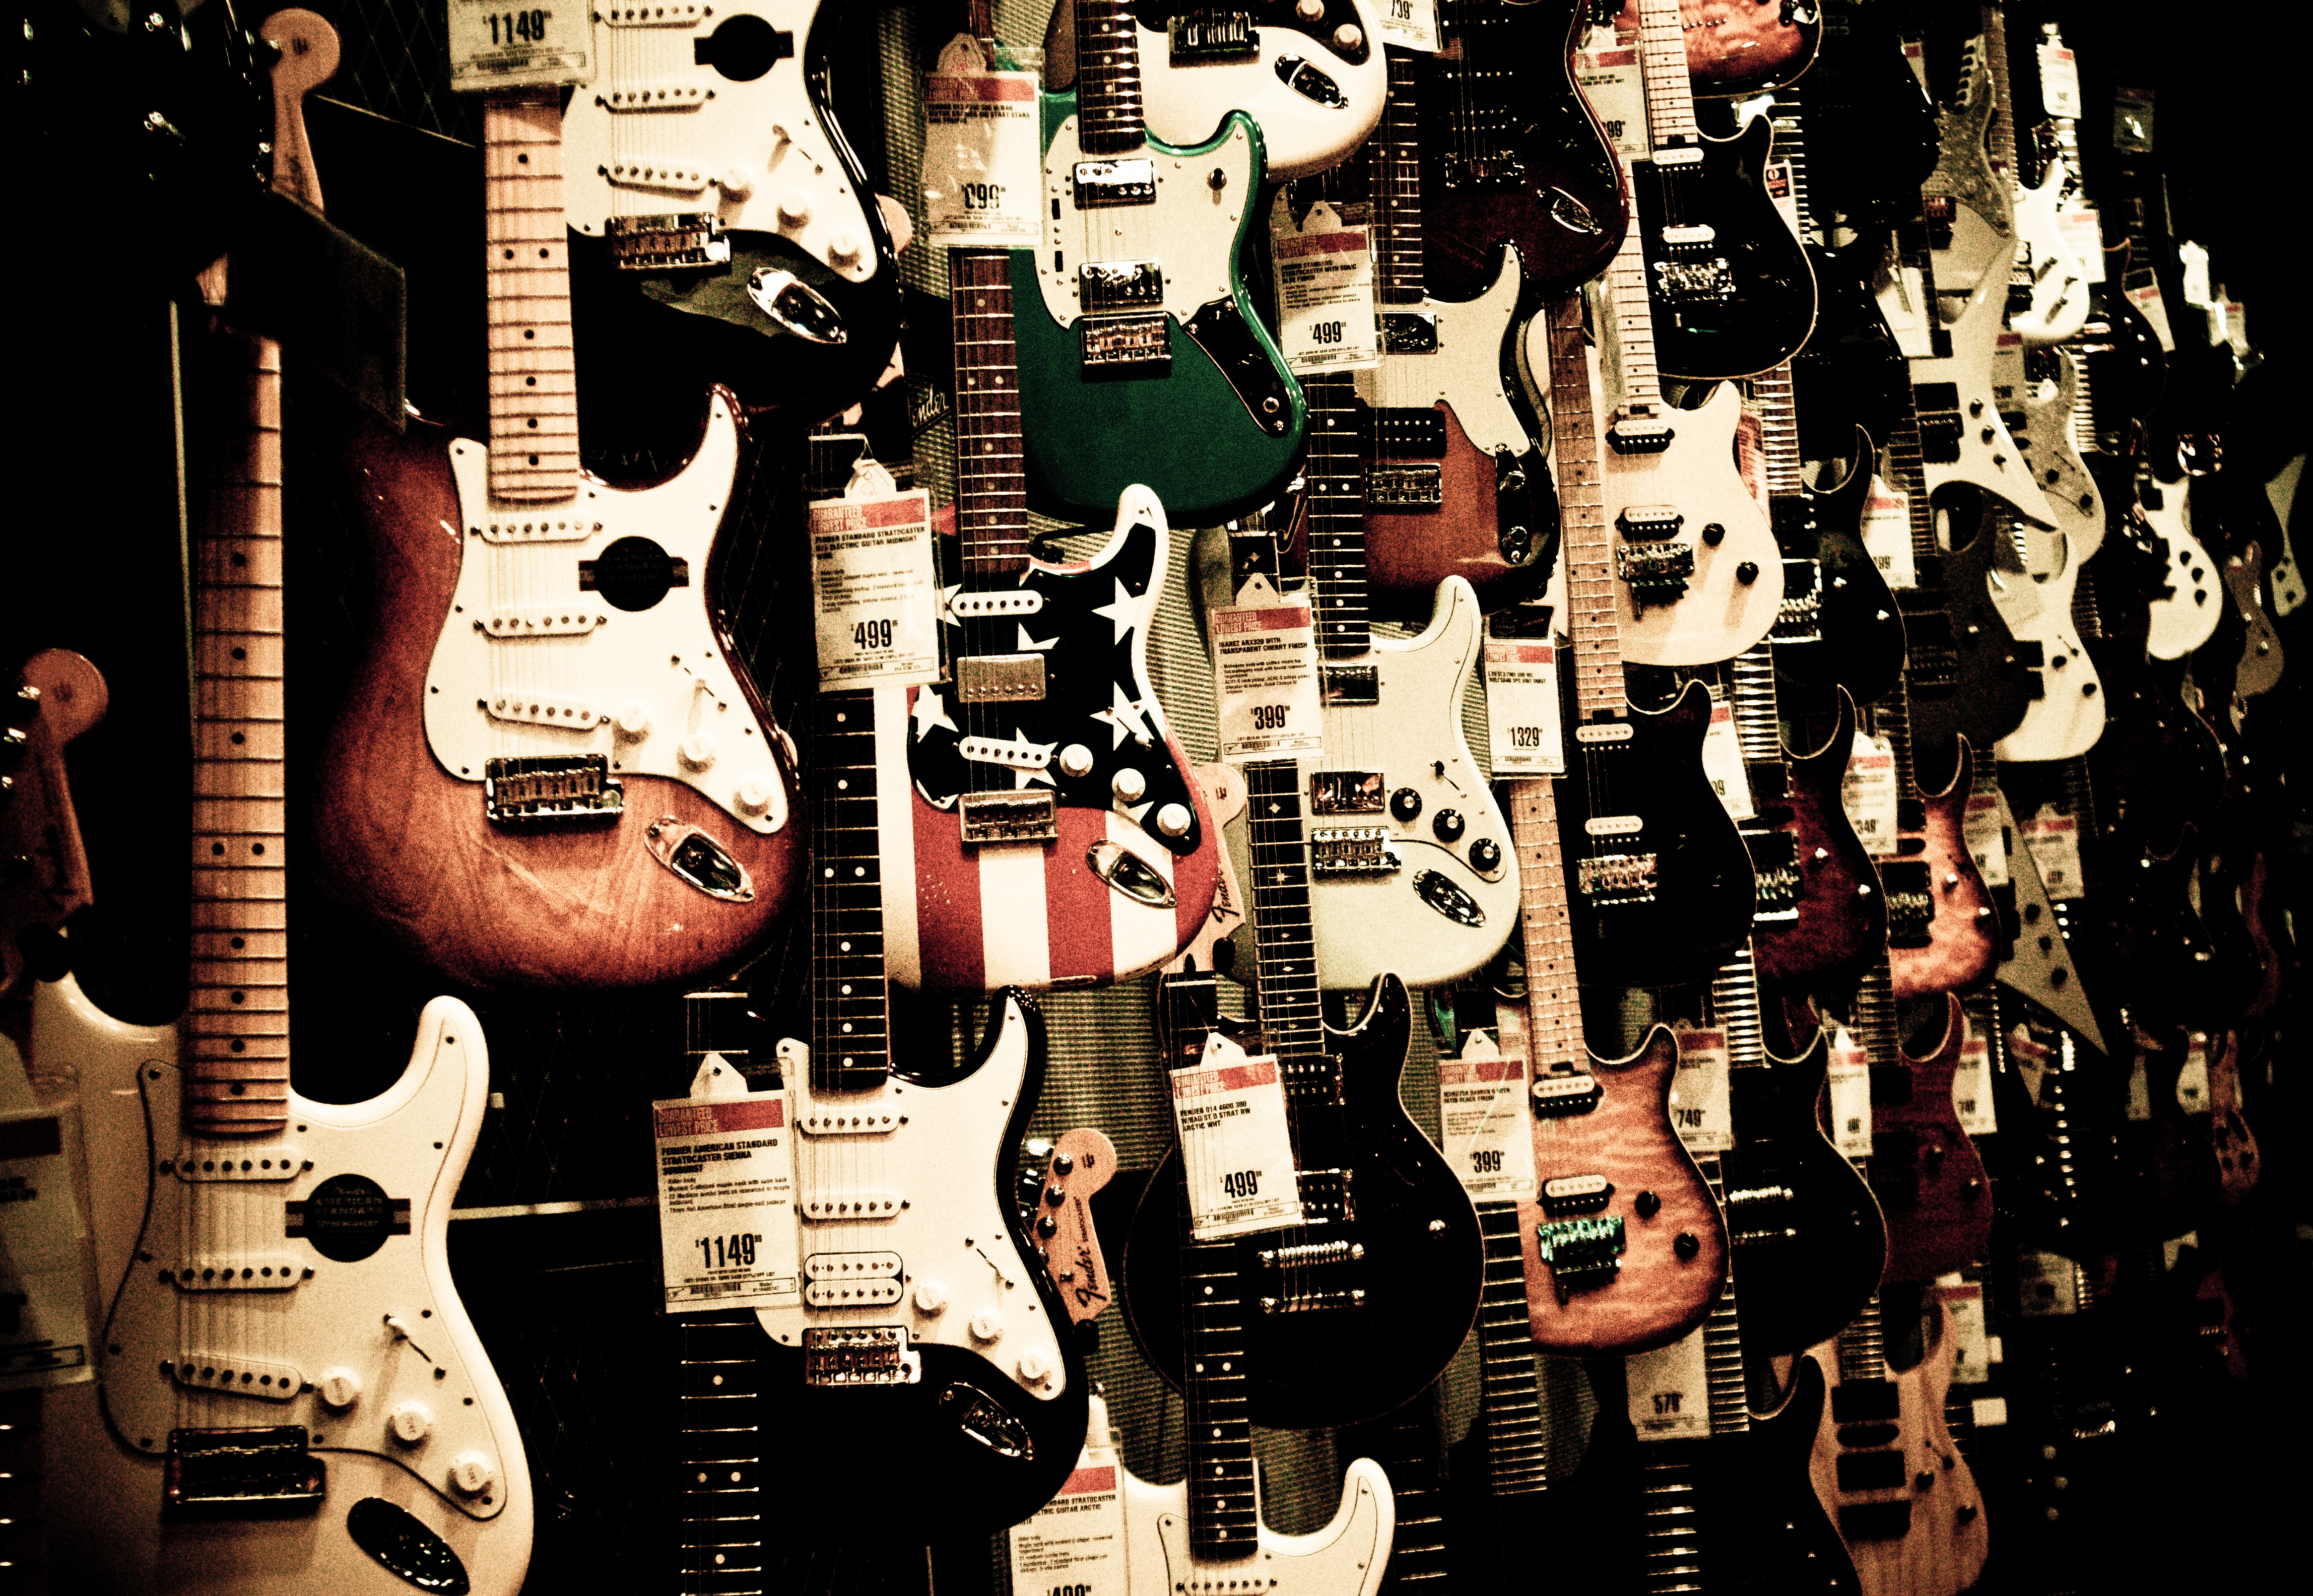 Wall of guitars photo